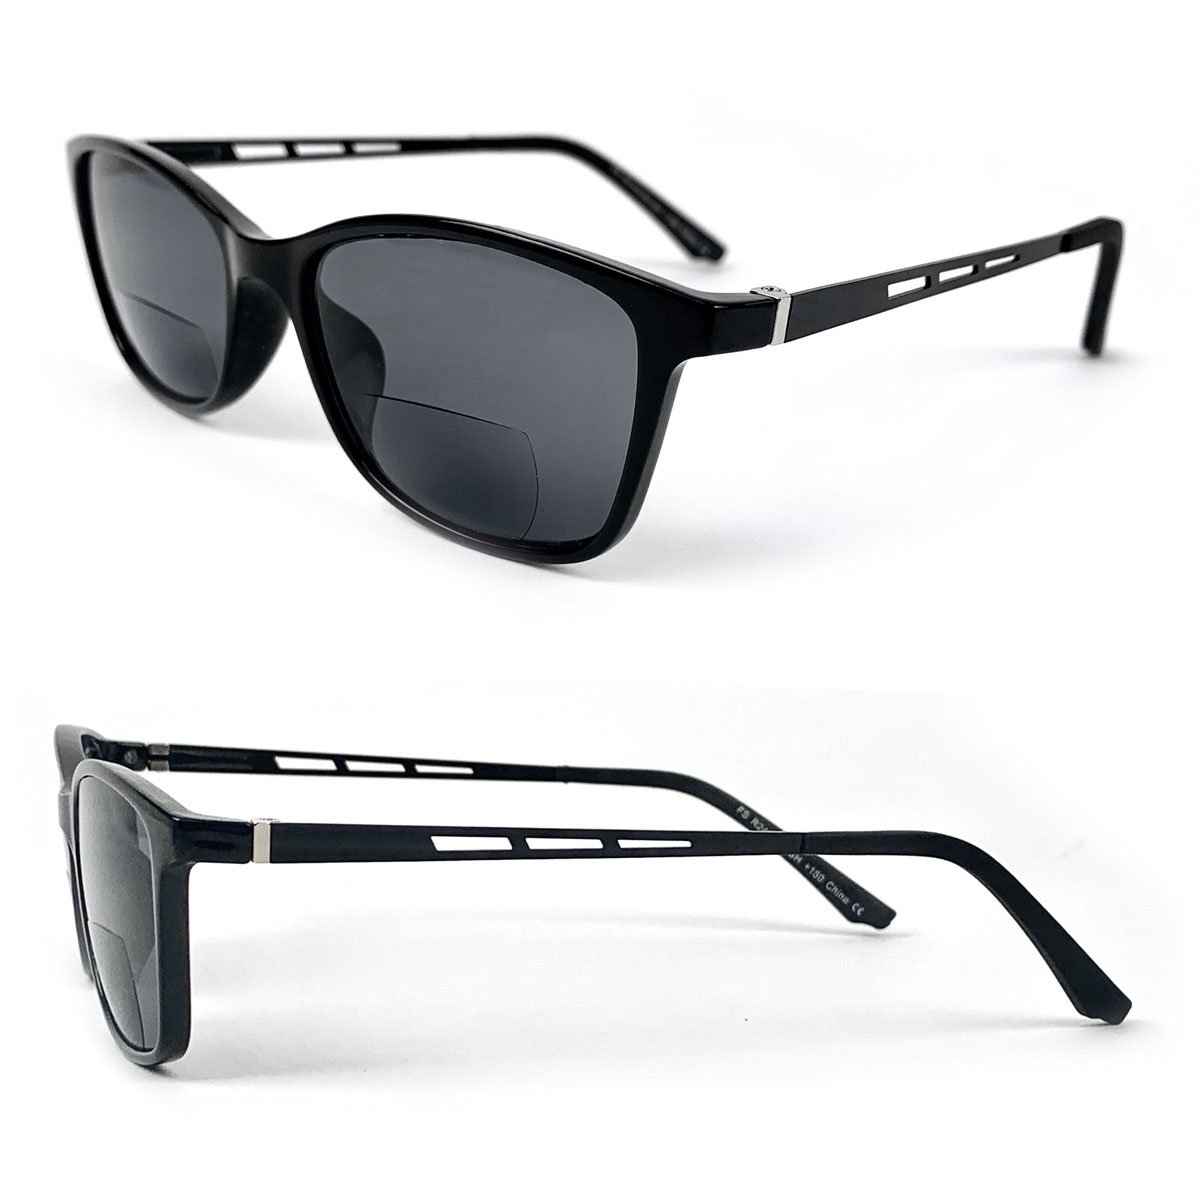 Bifocal Sun Readers Classic Frame Geek Retro Style Reading Sunglasses - Black, +2.00